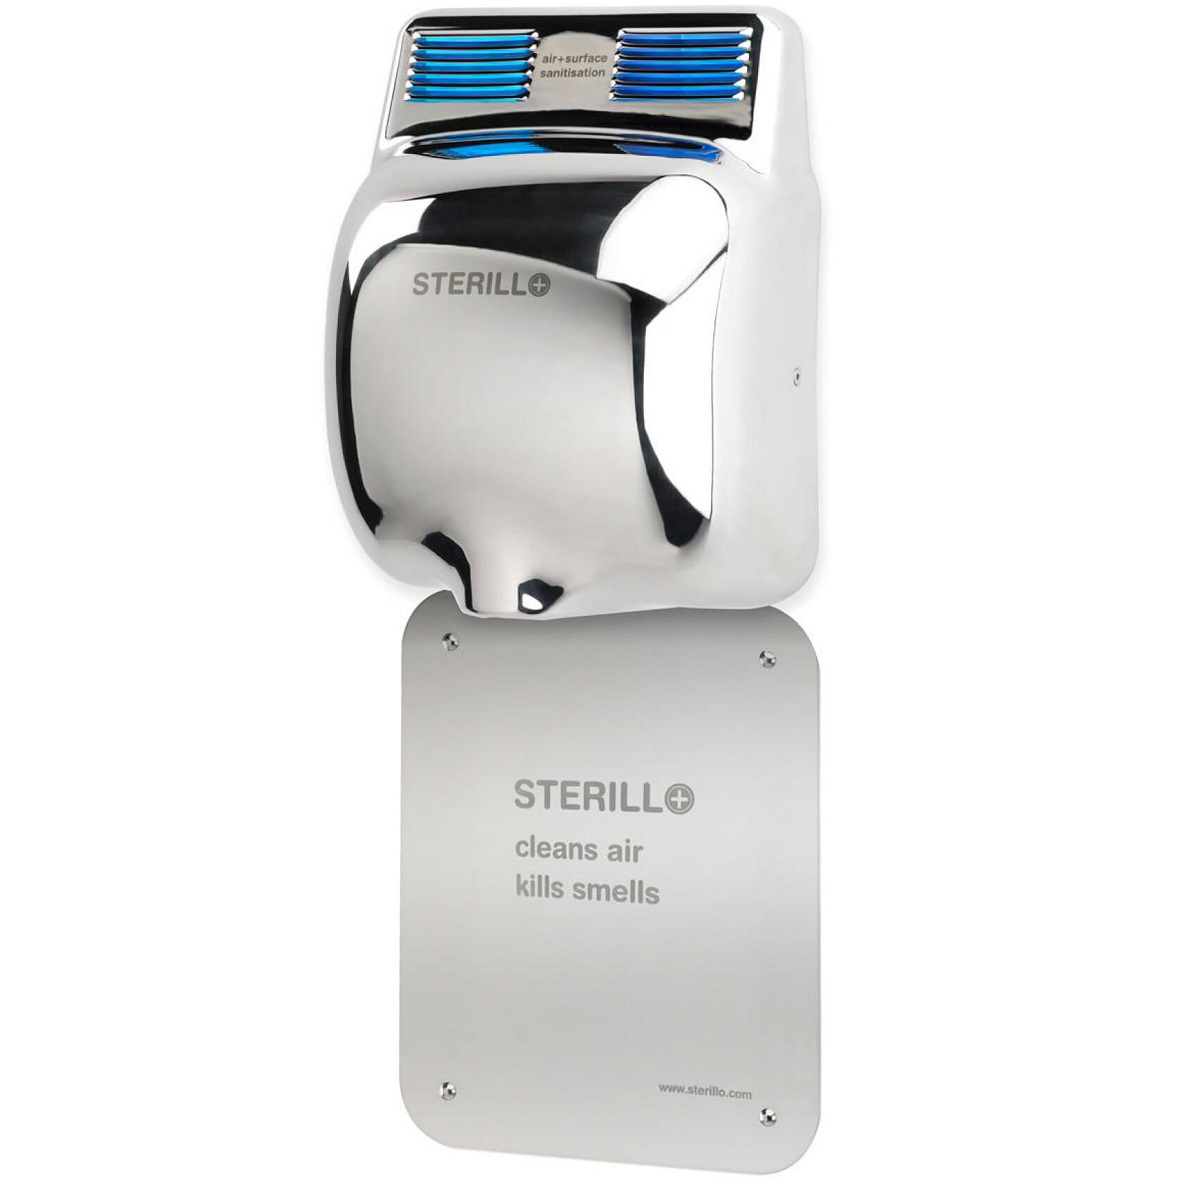 Sterillo Hand Dryer